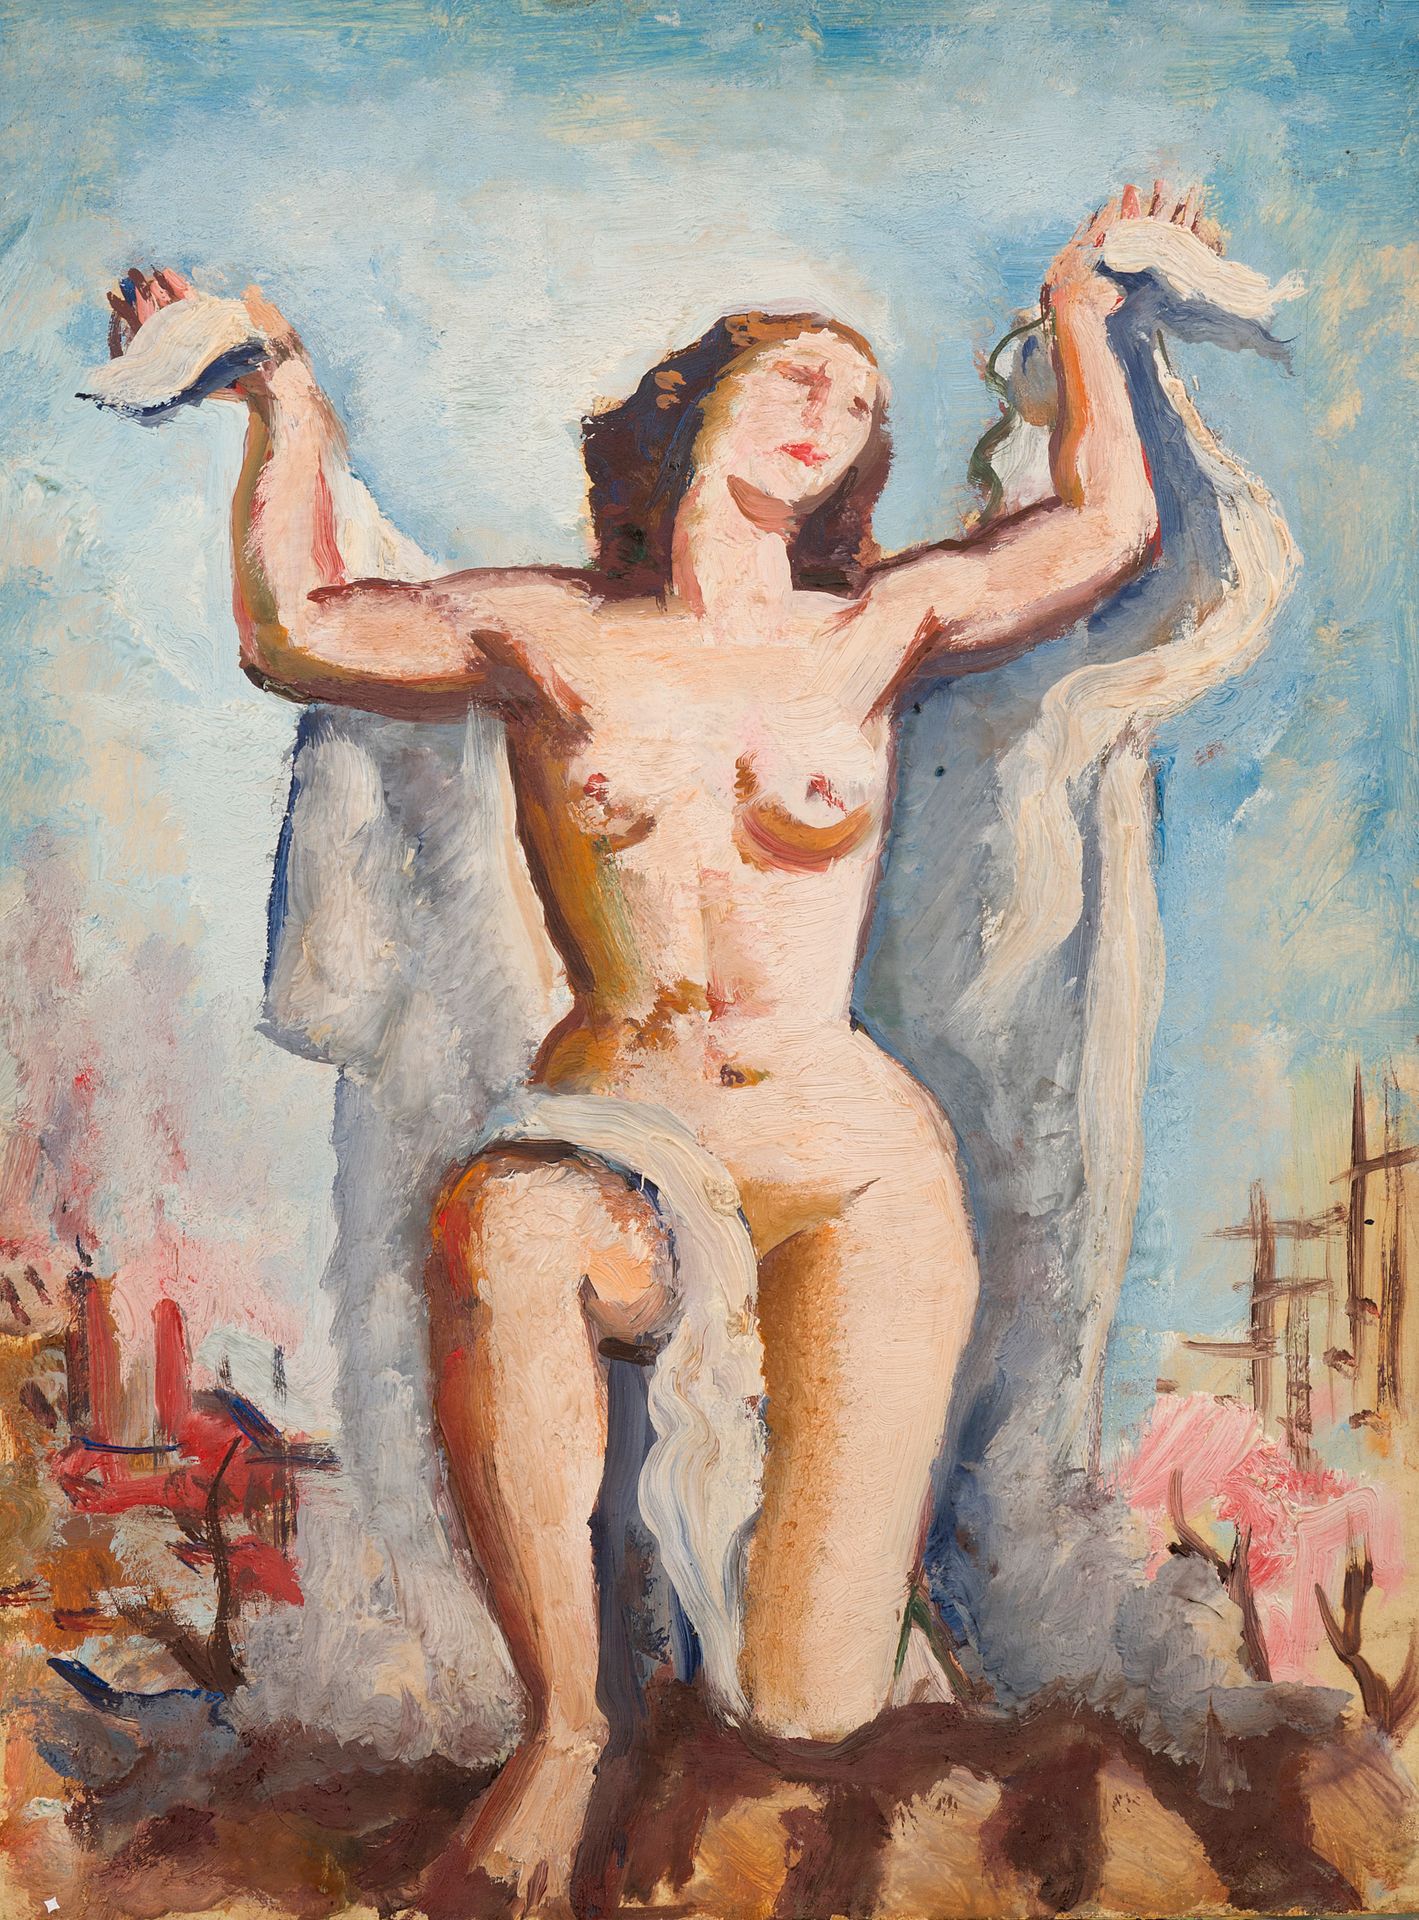 Null Charles PICART LE DOUX (1881-1959)
Allegory, 1937
Oil on isorel
33 x 24 cm